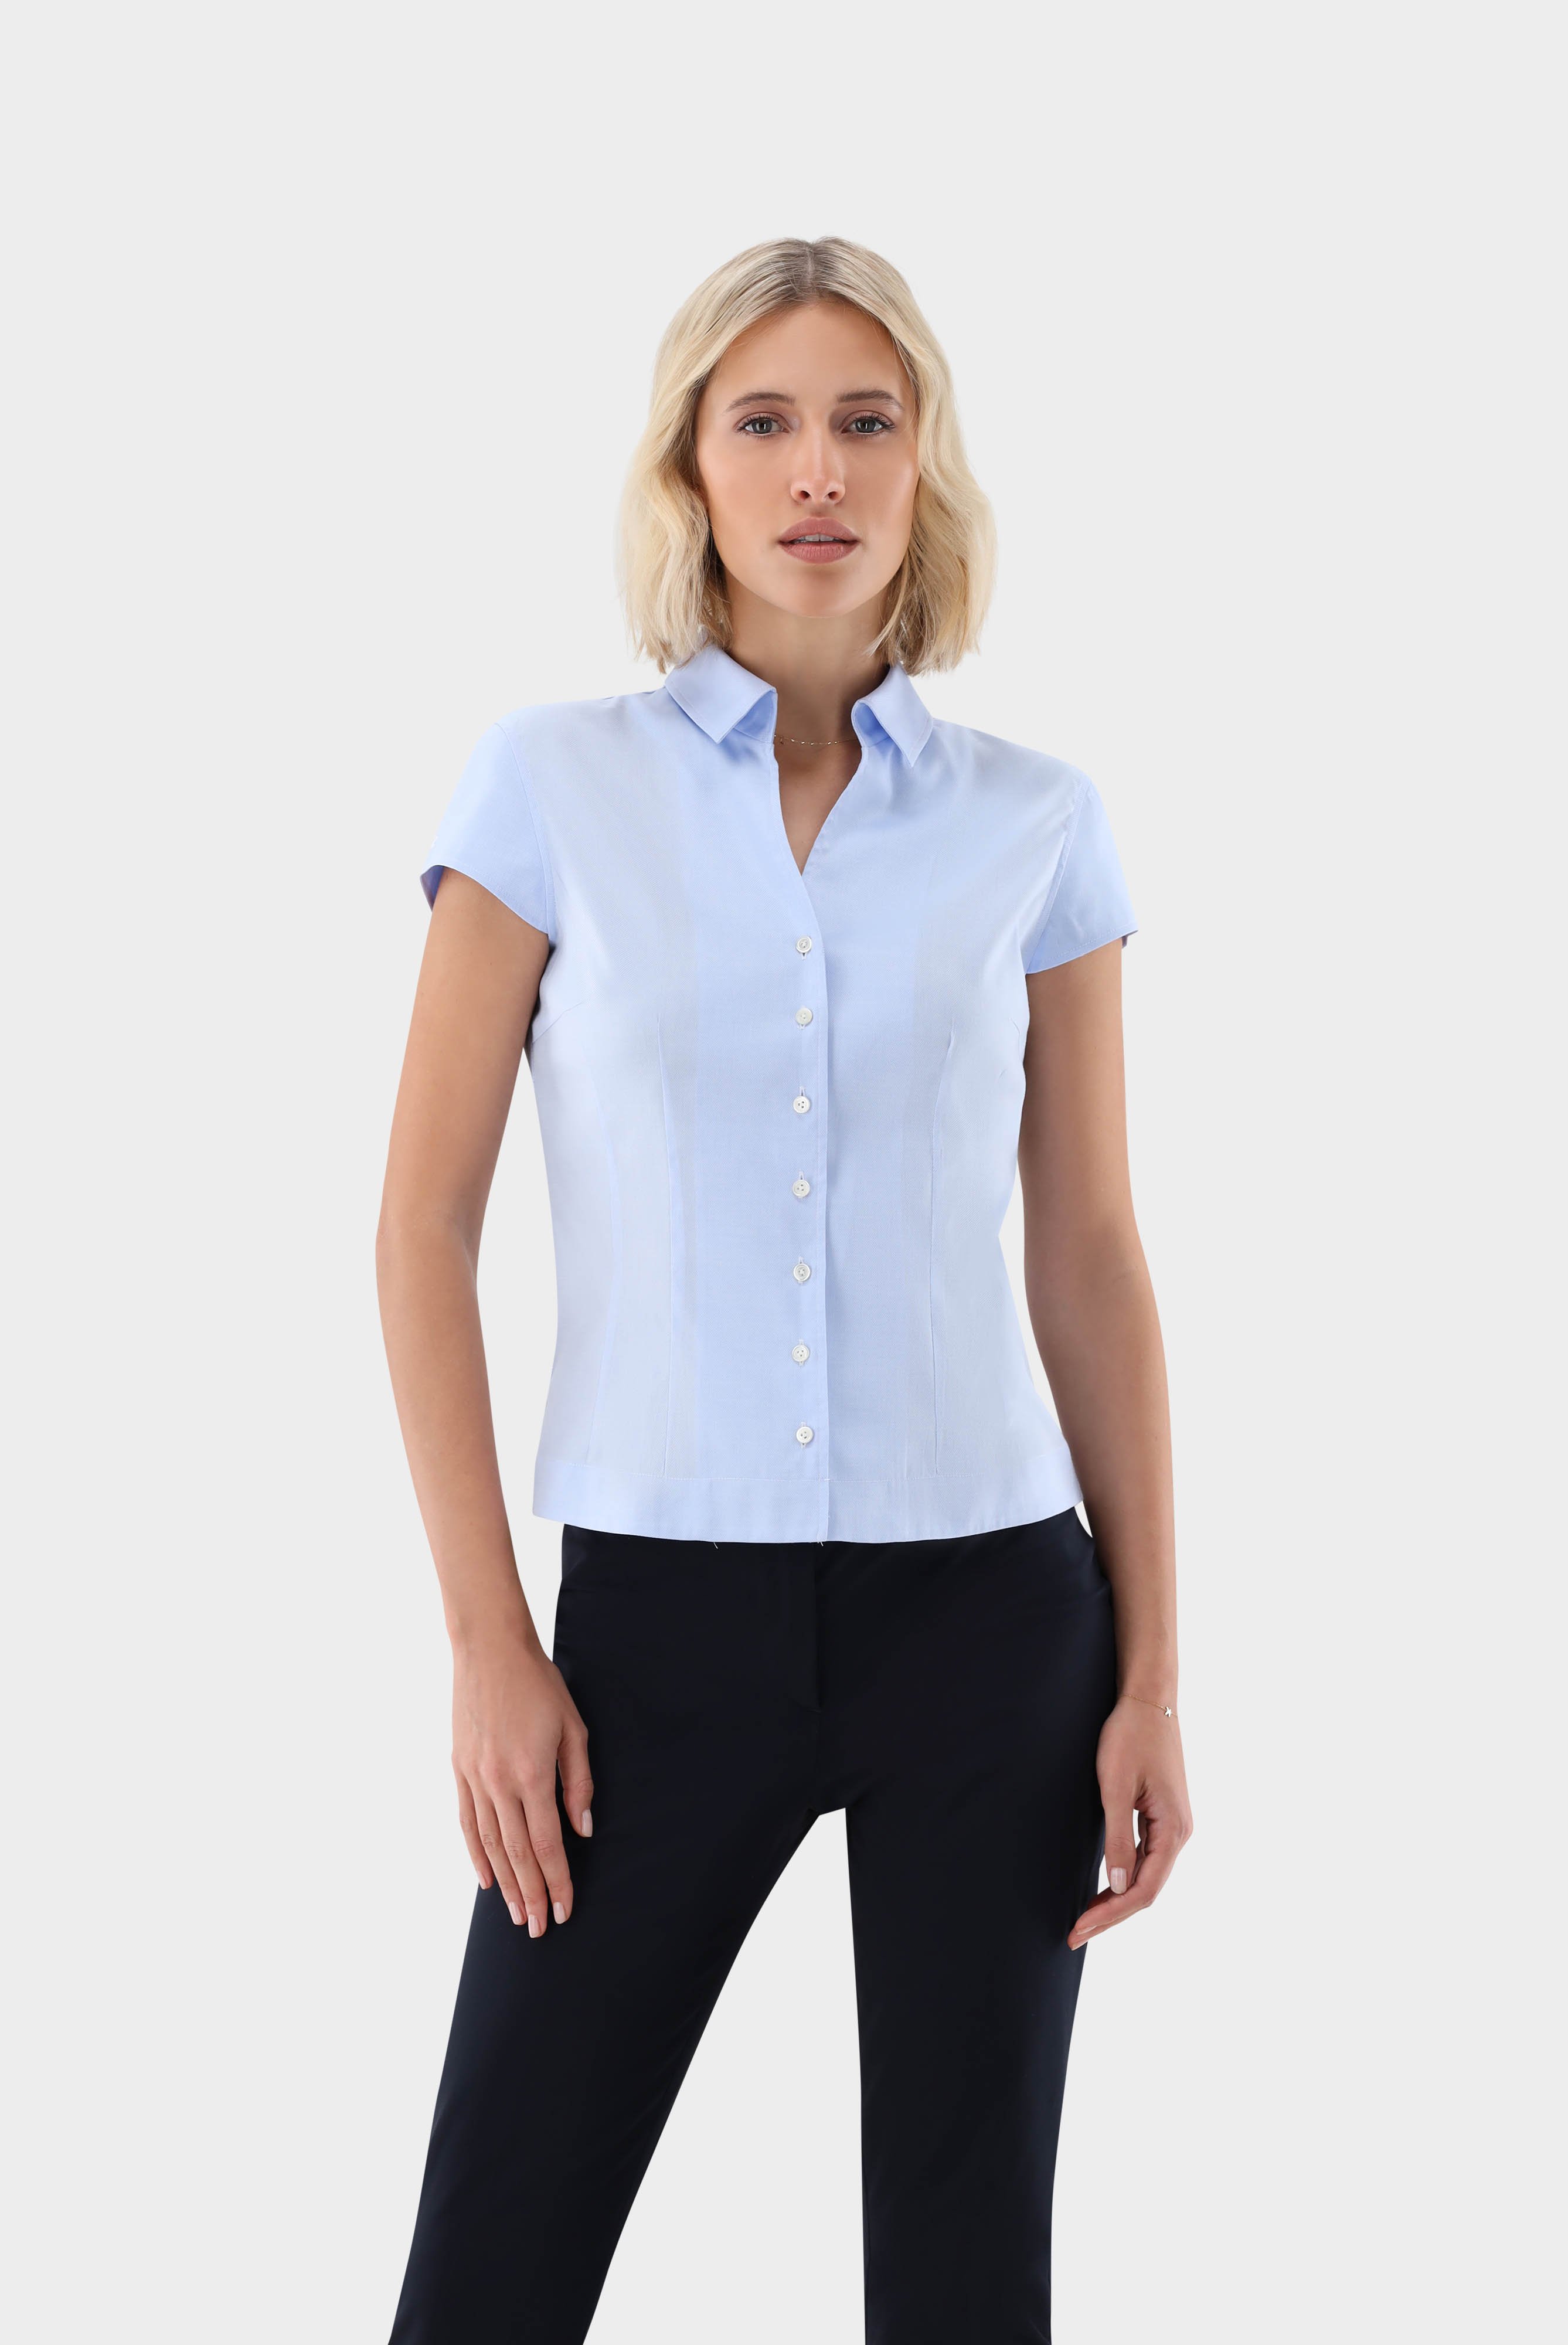 Business Blouses+Natté Short Sleeve Shirt Blouse+05.5029.73.130532.720.48